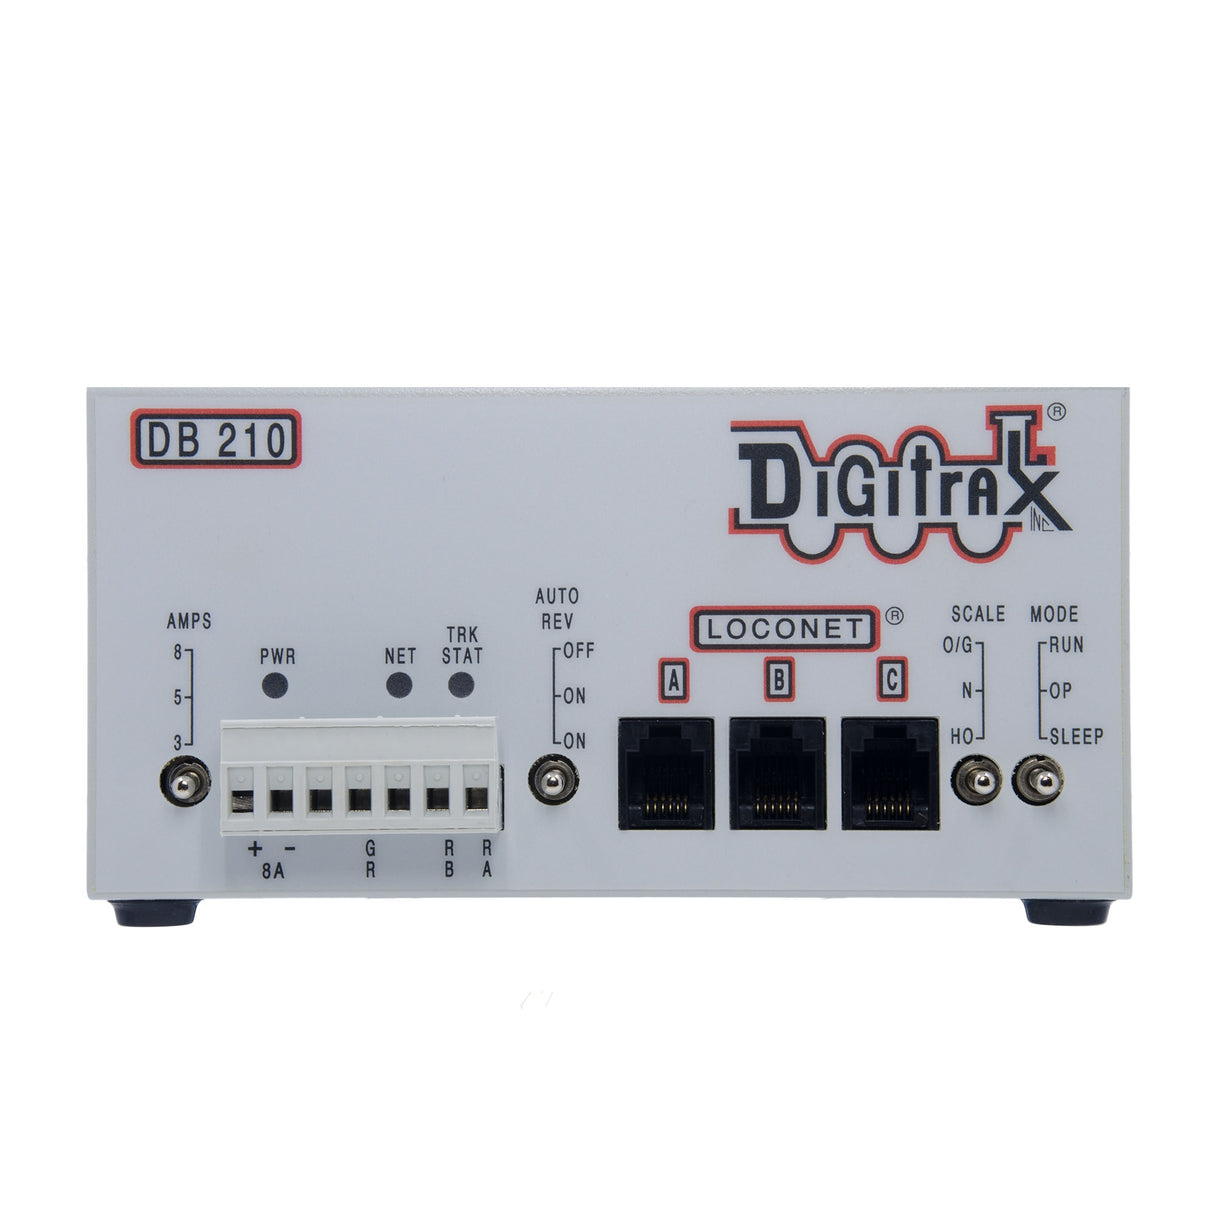 Digitrax DB210 Single 3/5/8 Amp Auto Reversing DCC Booster Digitrax TRAINS - DCC